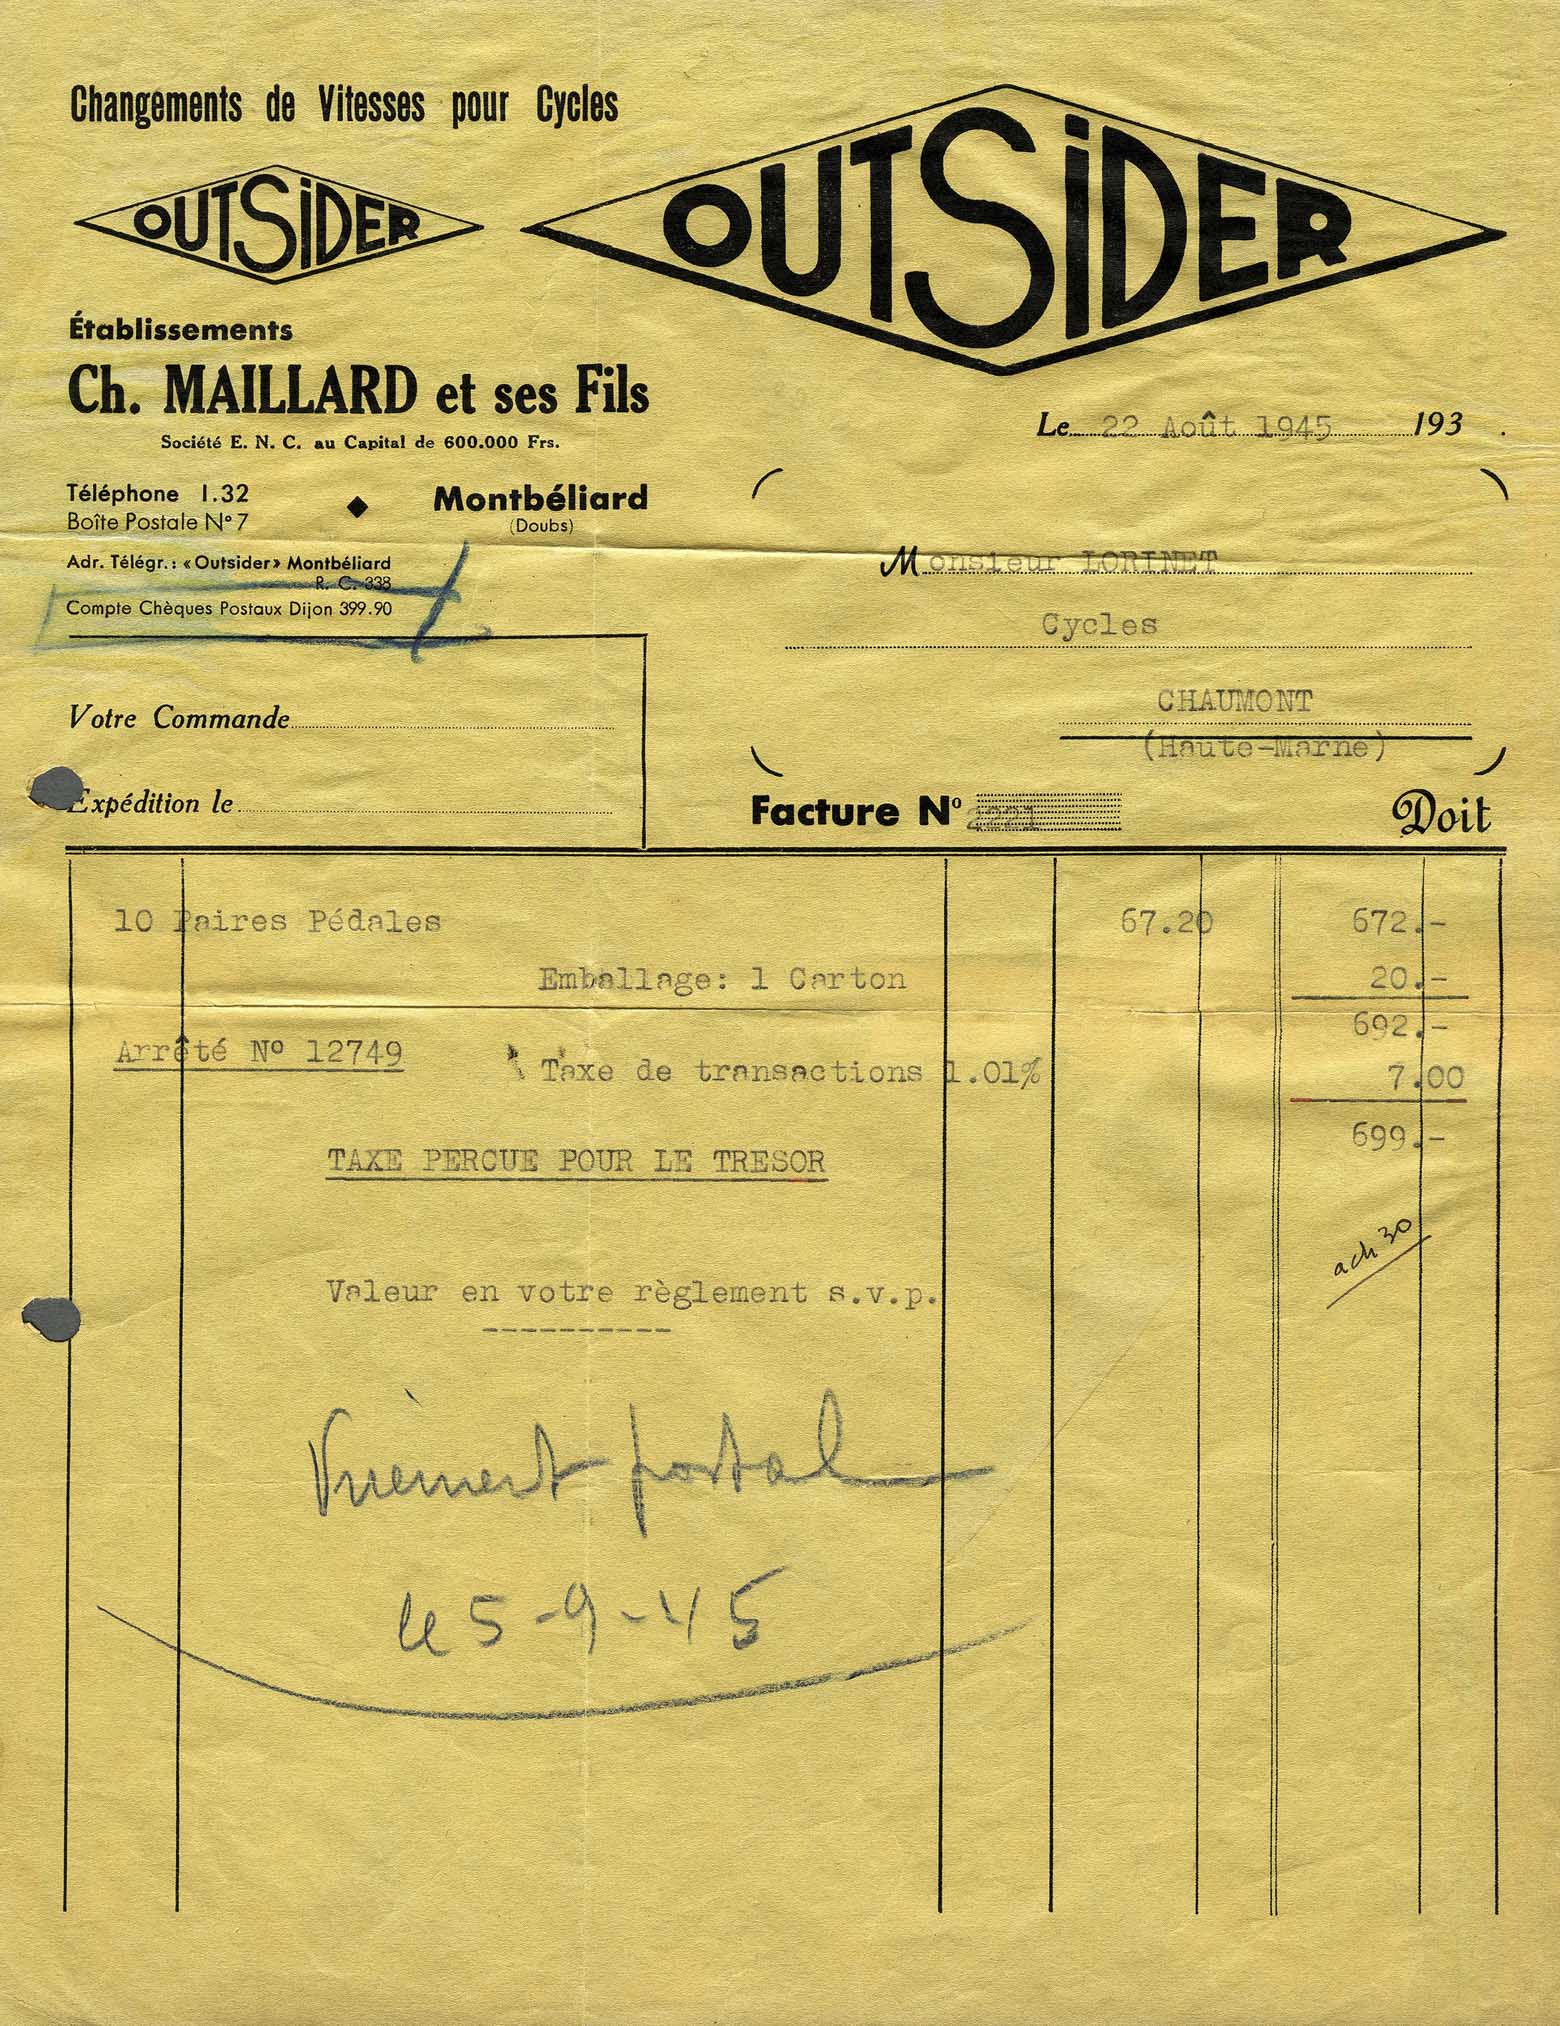 Outsider - invoice 1945 main image